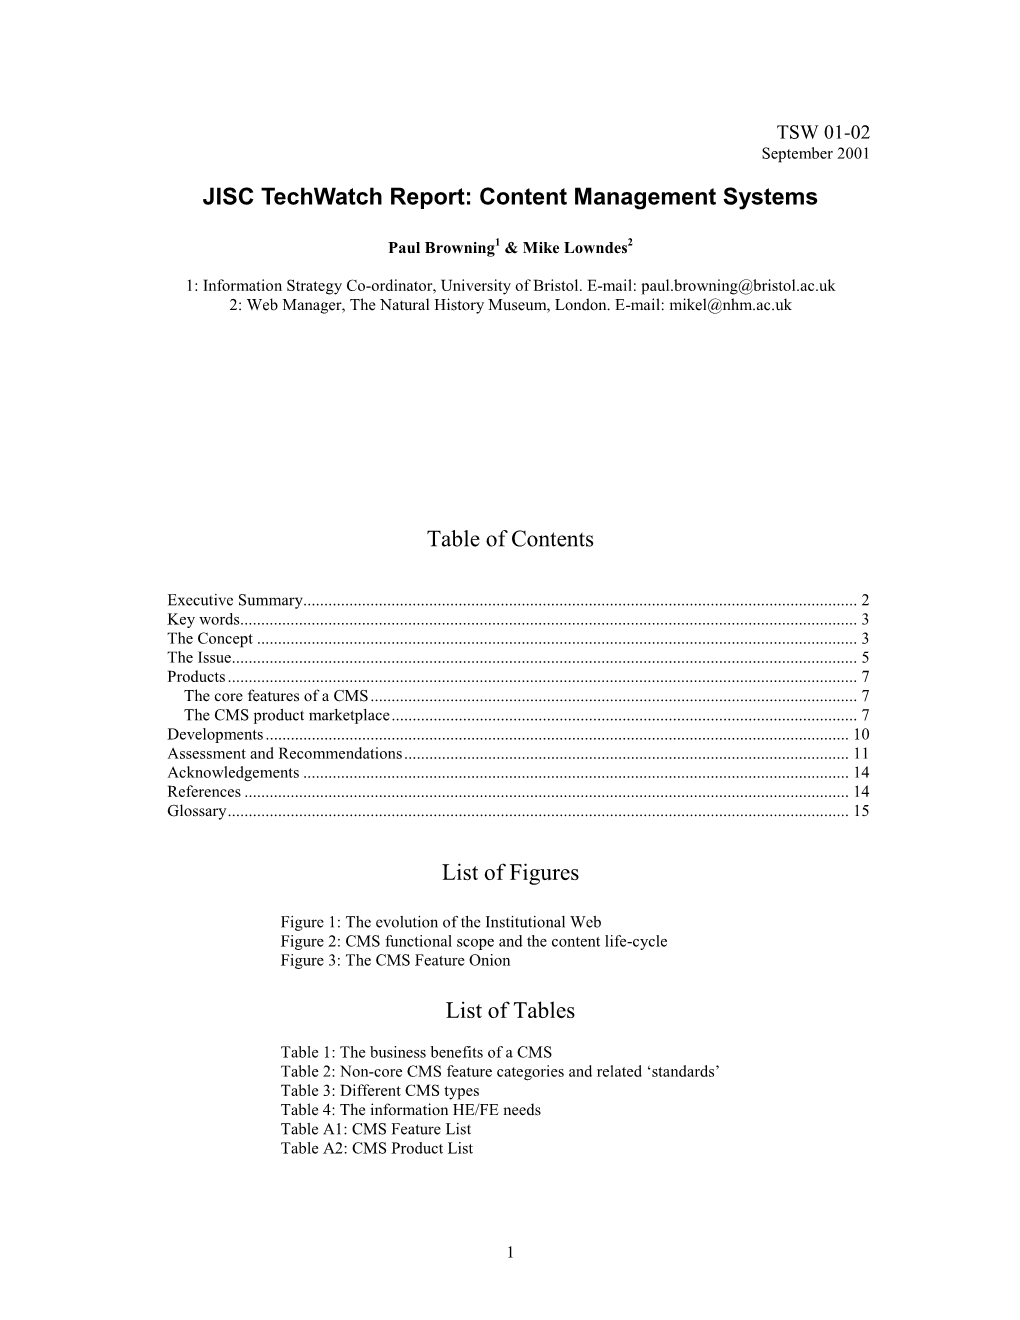 Web Content Management Systems (CMS)